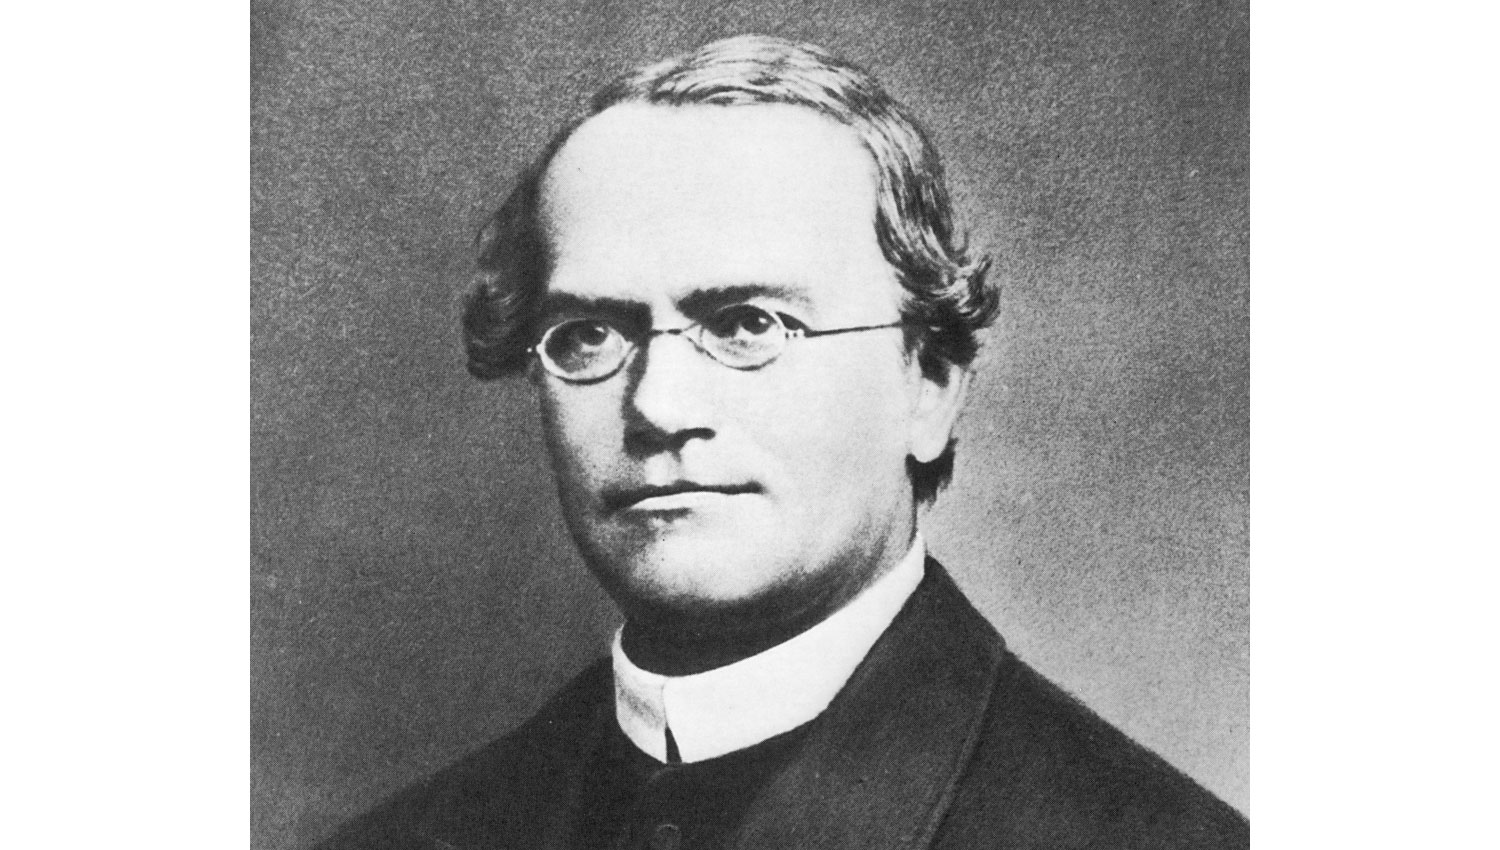 Black and white photographic portrait of Gregor Mendel.